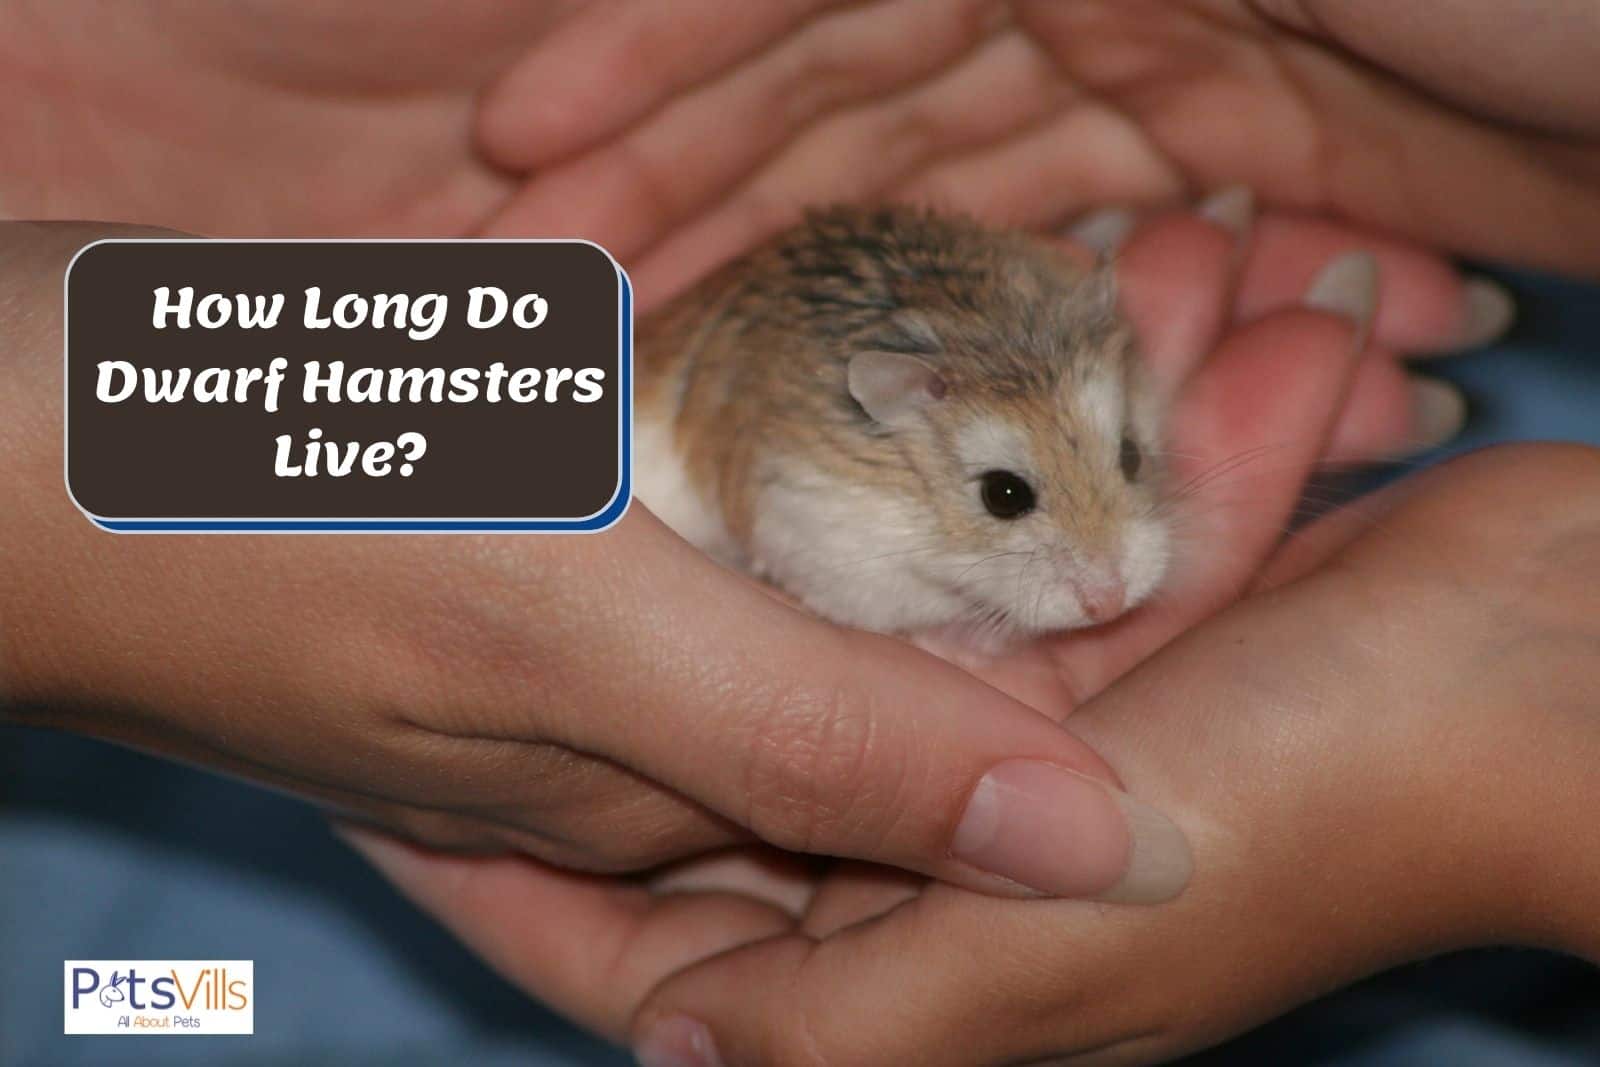 a dwarf hamster in a girls hand